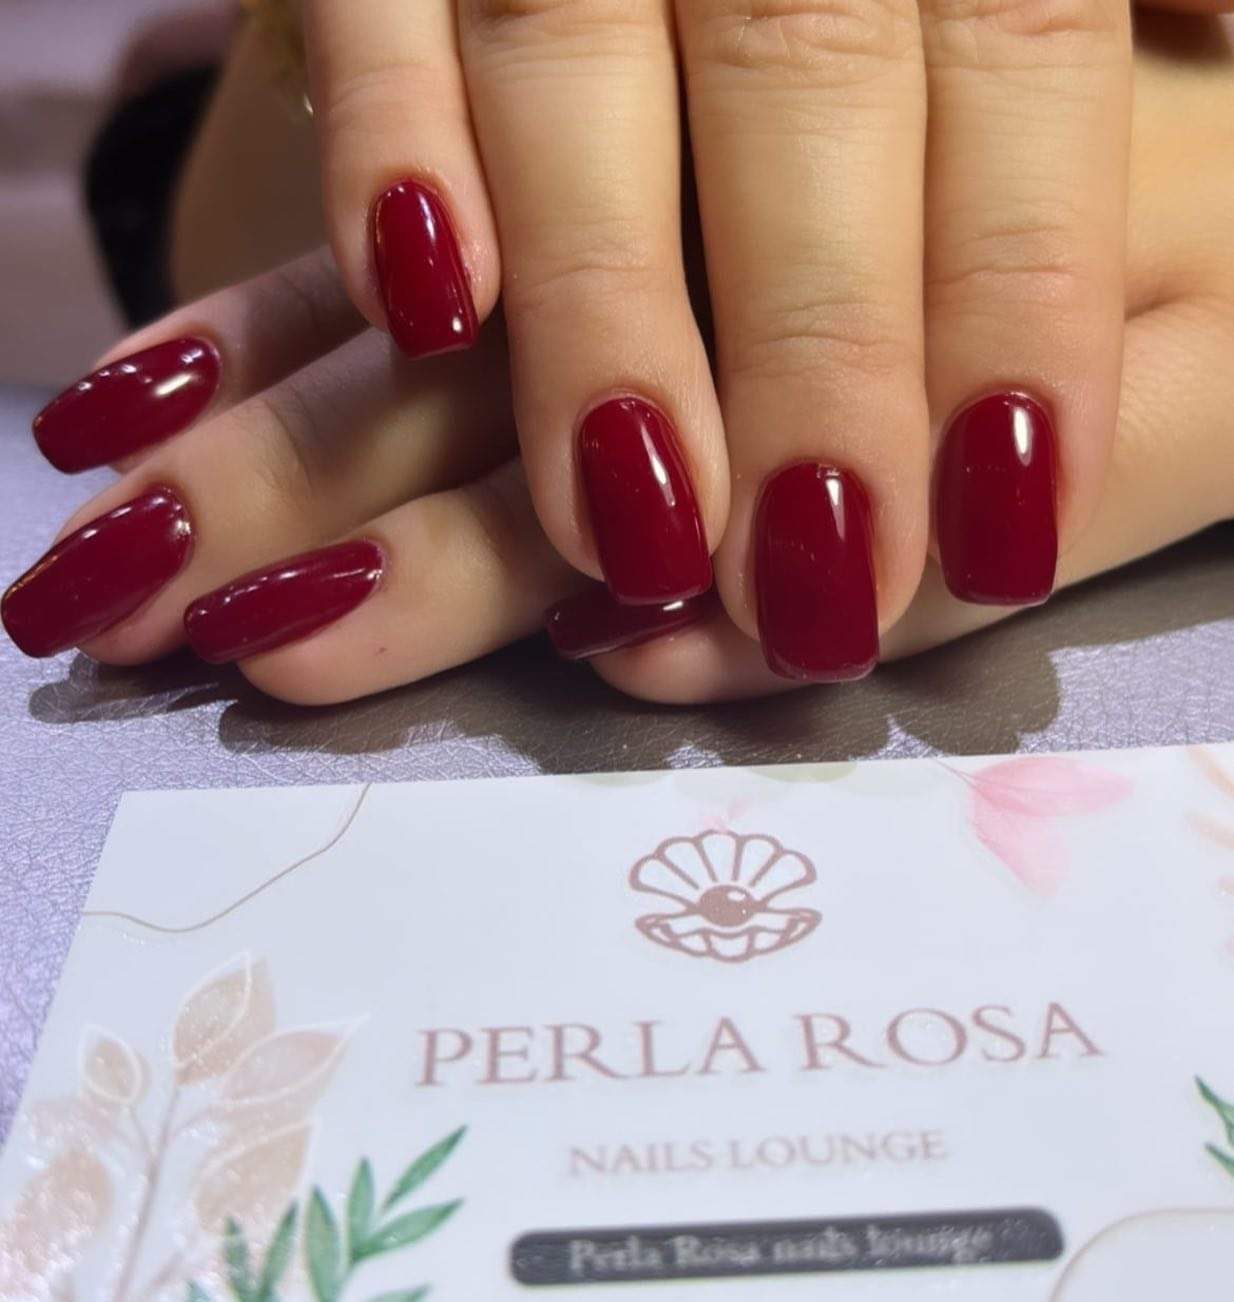 Perlarosa Nails Lounge